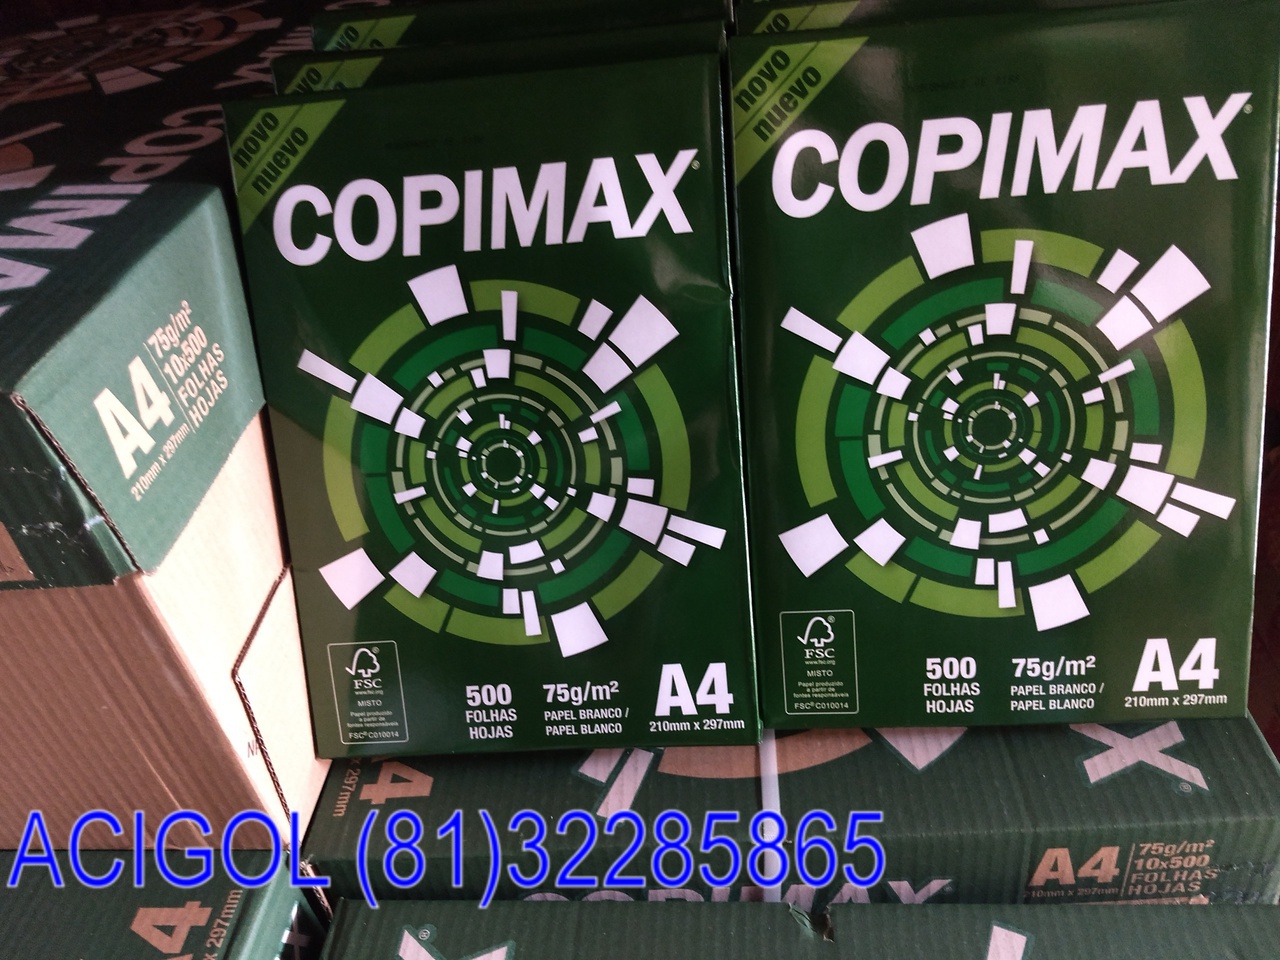 PAPEL A4 COPIMAX-ACIGOL RECIFE 81 32285865-IMG_20180828_135836644_LL